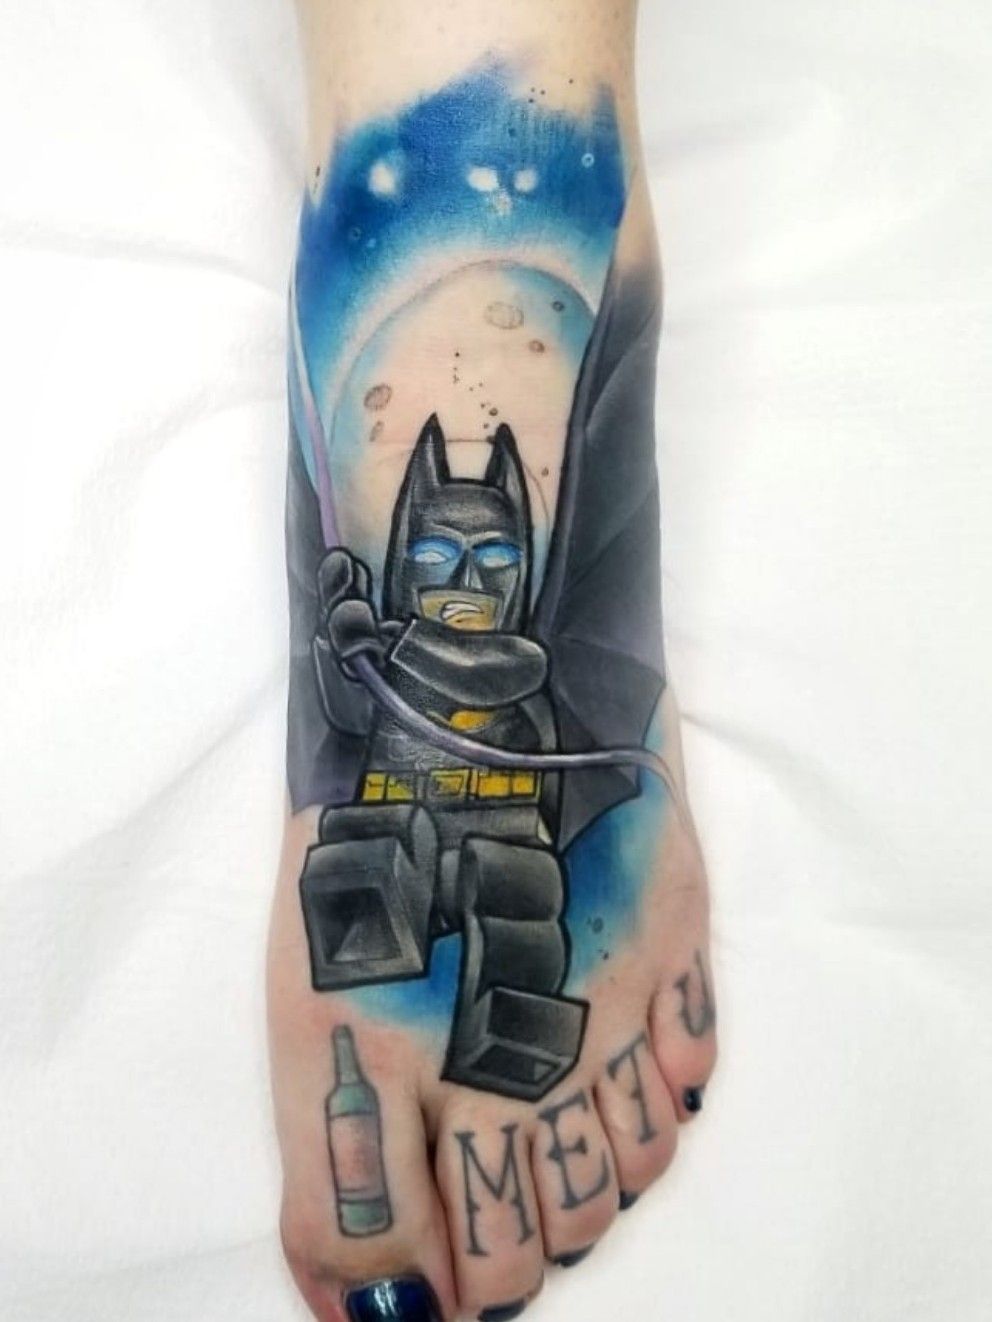 Tattoo uploaded by Jorell • Lego Batman (Cover up) #legotattoo #legobatman  #colortattoos #neotraditionaltattoo #coveruptattoo #CoverUpTattoos •  Tattoodo